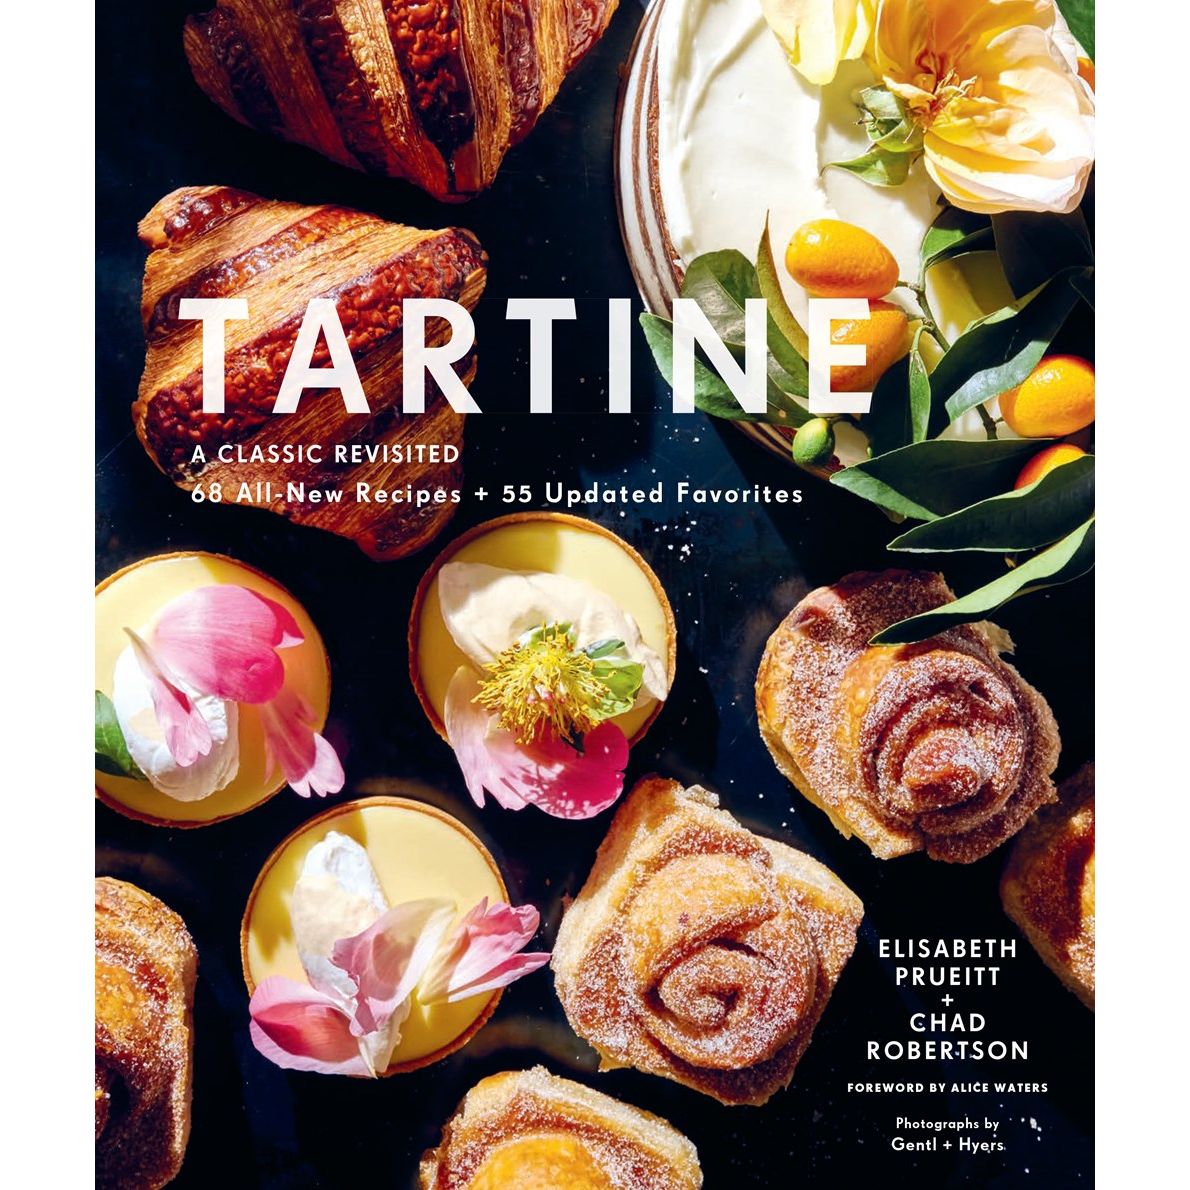 Tartine: A Classic Revisited (Elisabeth Prueitt & Chad Robertson)